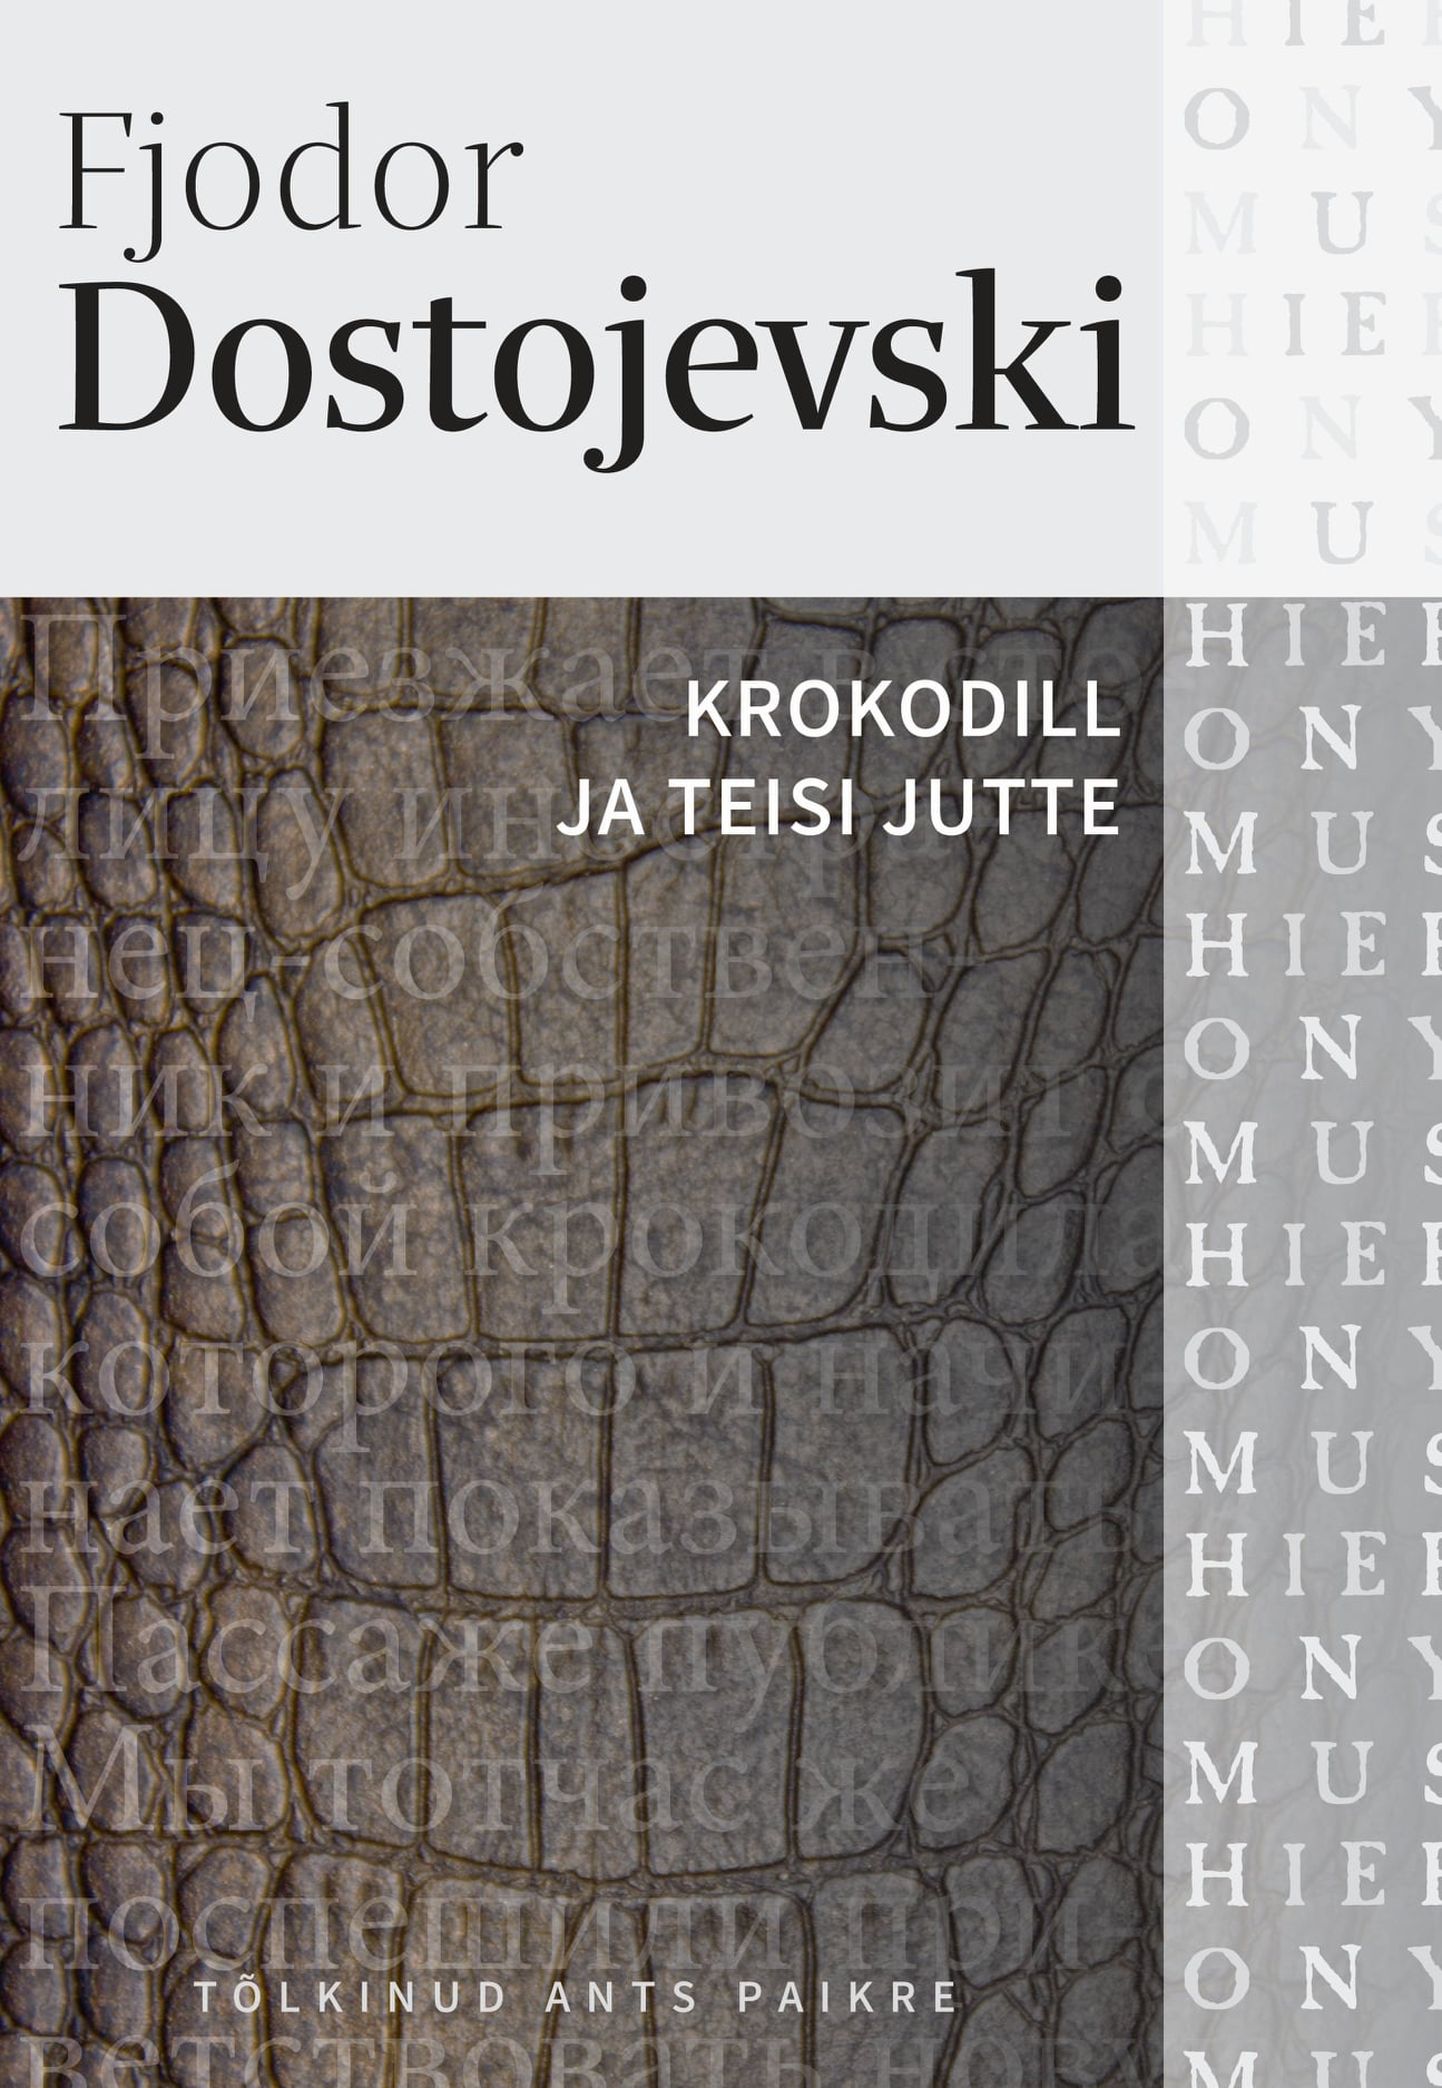 Fjodor Dostojevski, «Krokodill ja teisi jutte».